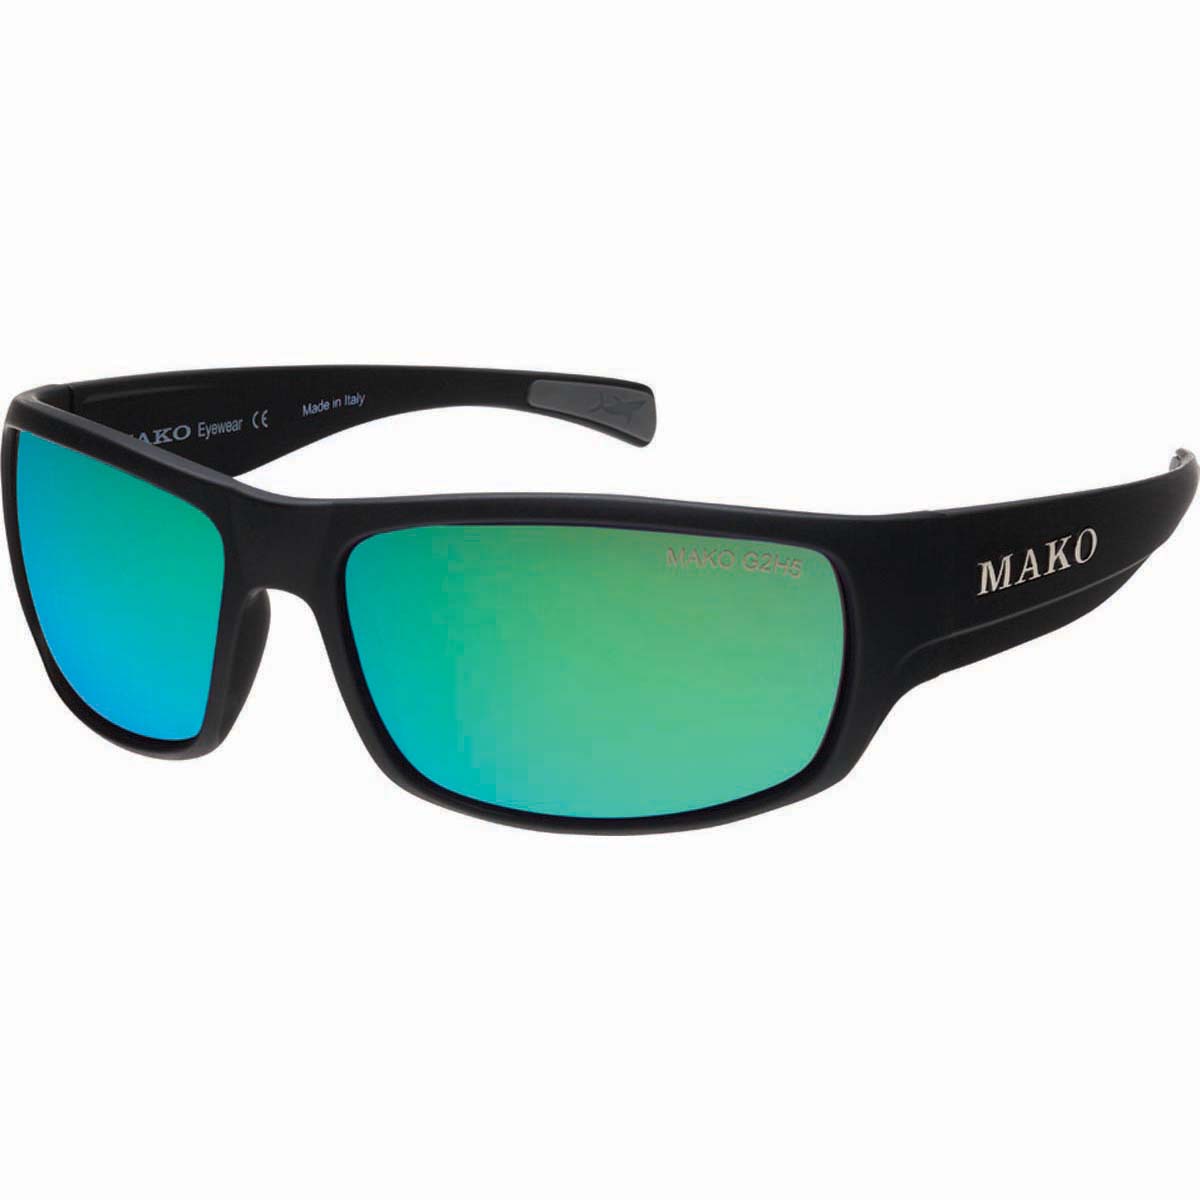 MAKO Escape Polarised Sunglasses with Green lens